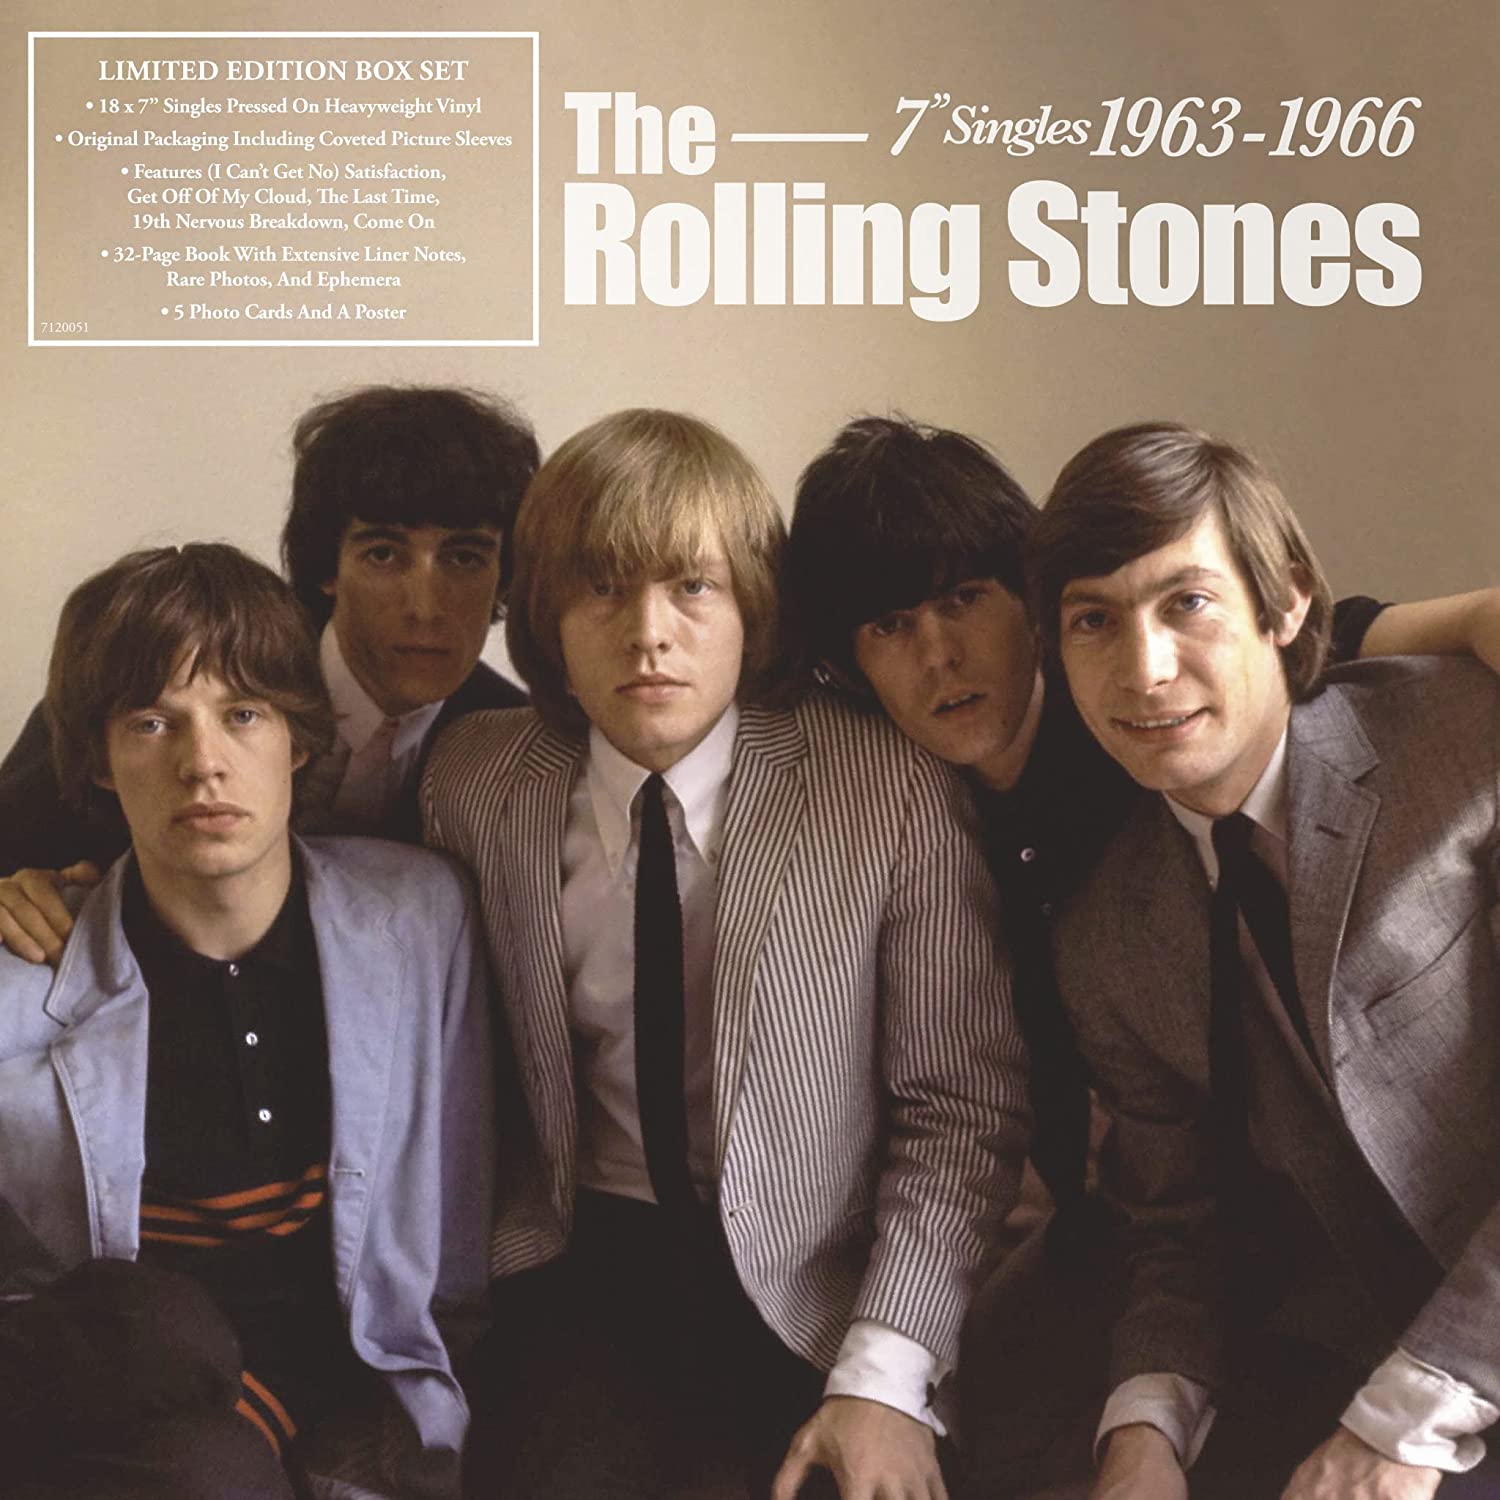 The Rolling Stones 7” Singles 1963-1966 (Vinyl Box Set) - ABKCO 